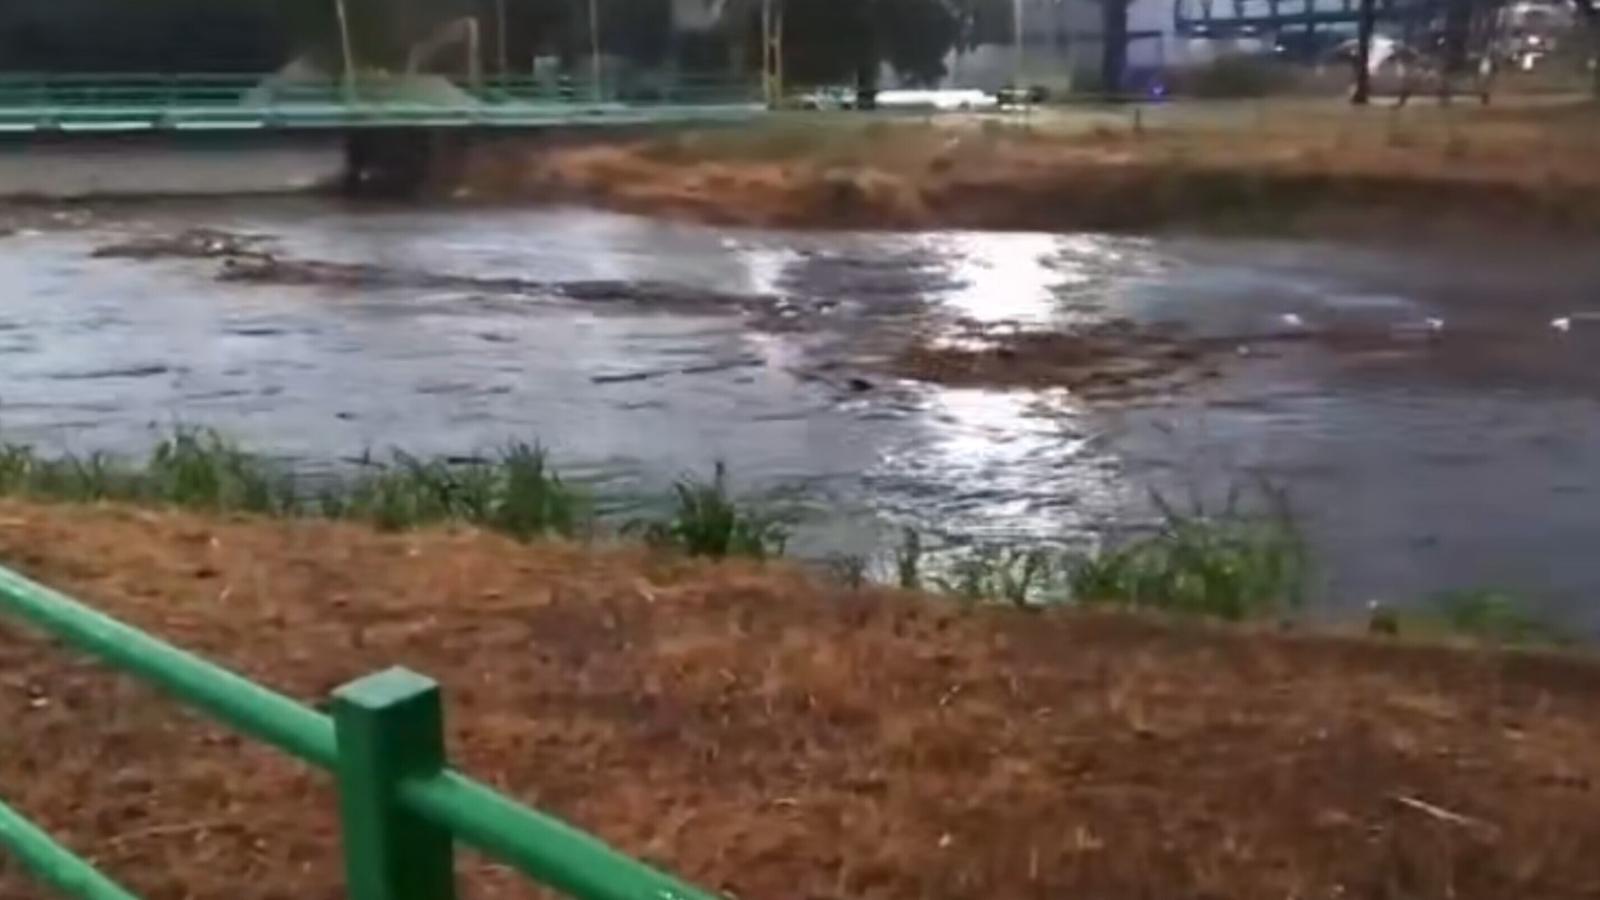 Calles totalmente inundadas tras fuertes lluvias en Carabobo,
Venezuela